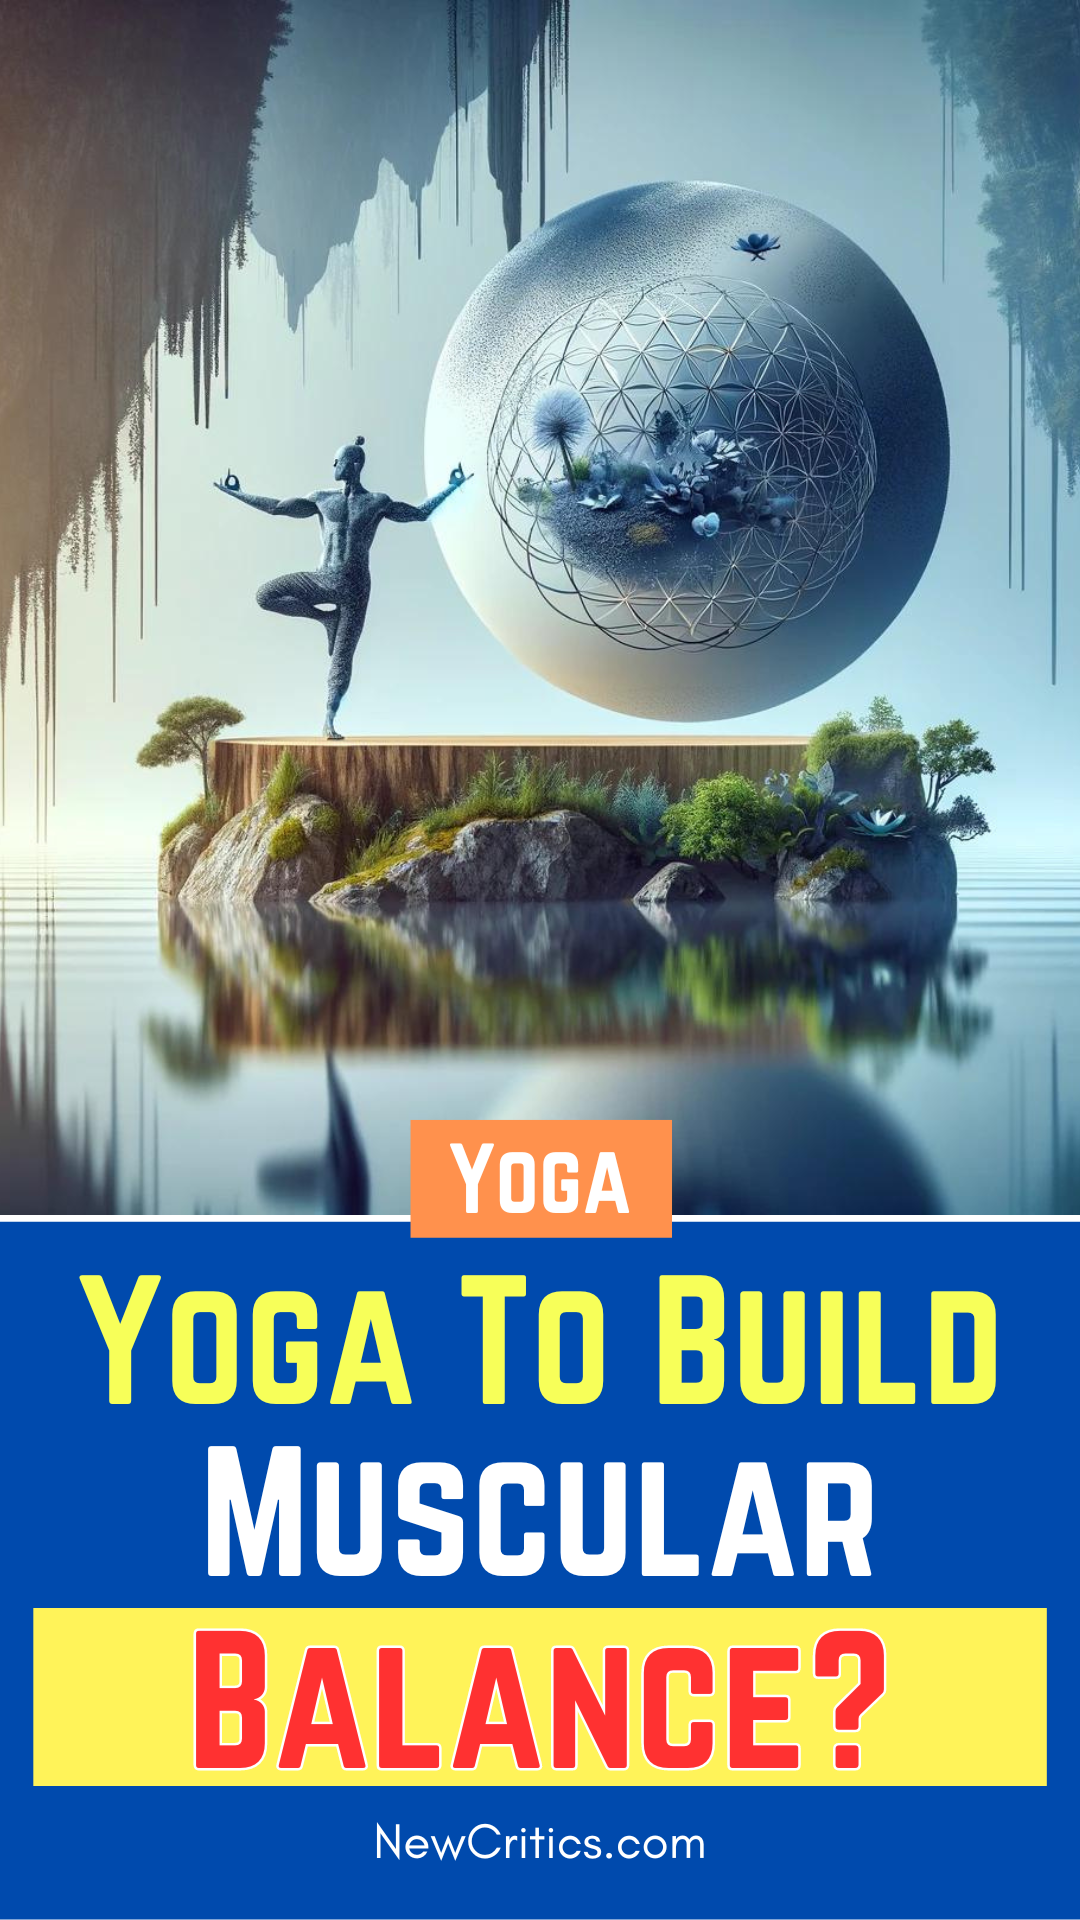 Yoga to Build Muscular Balance